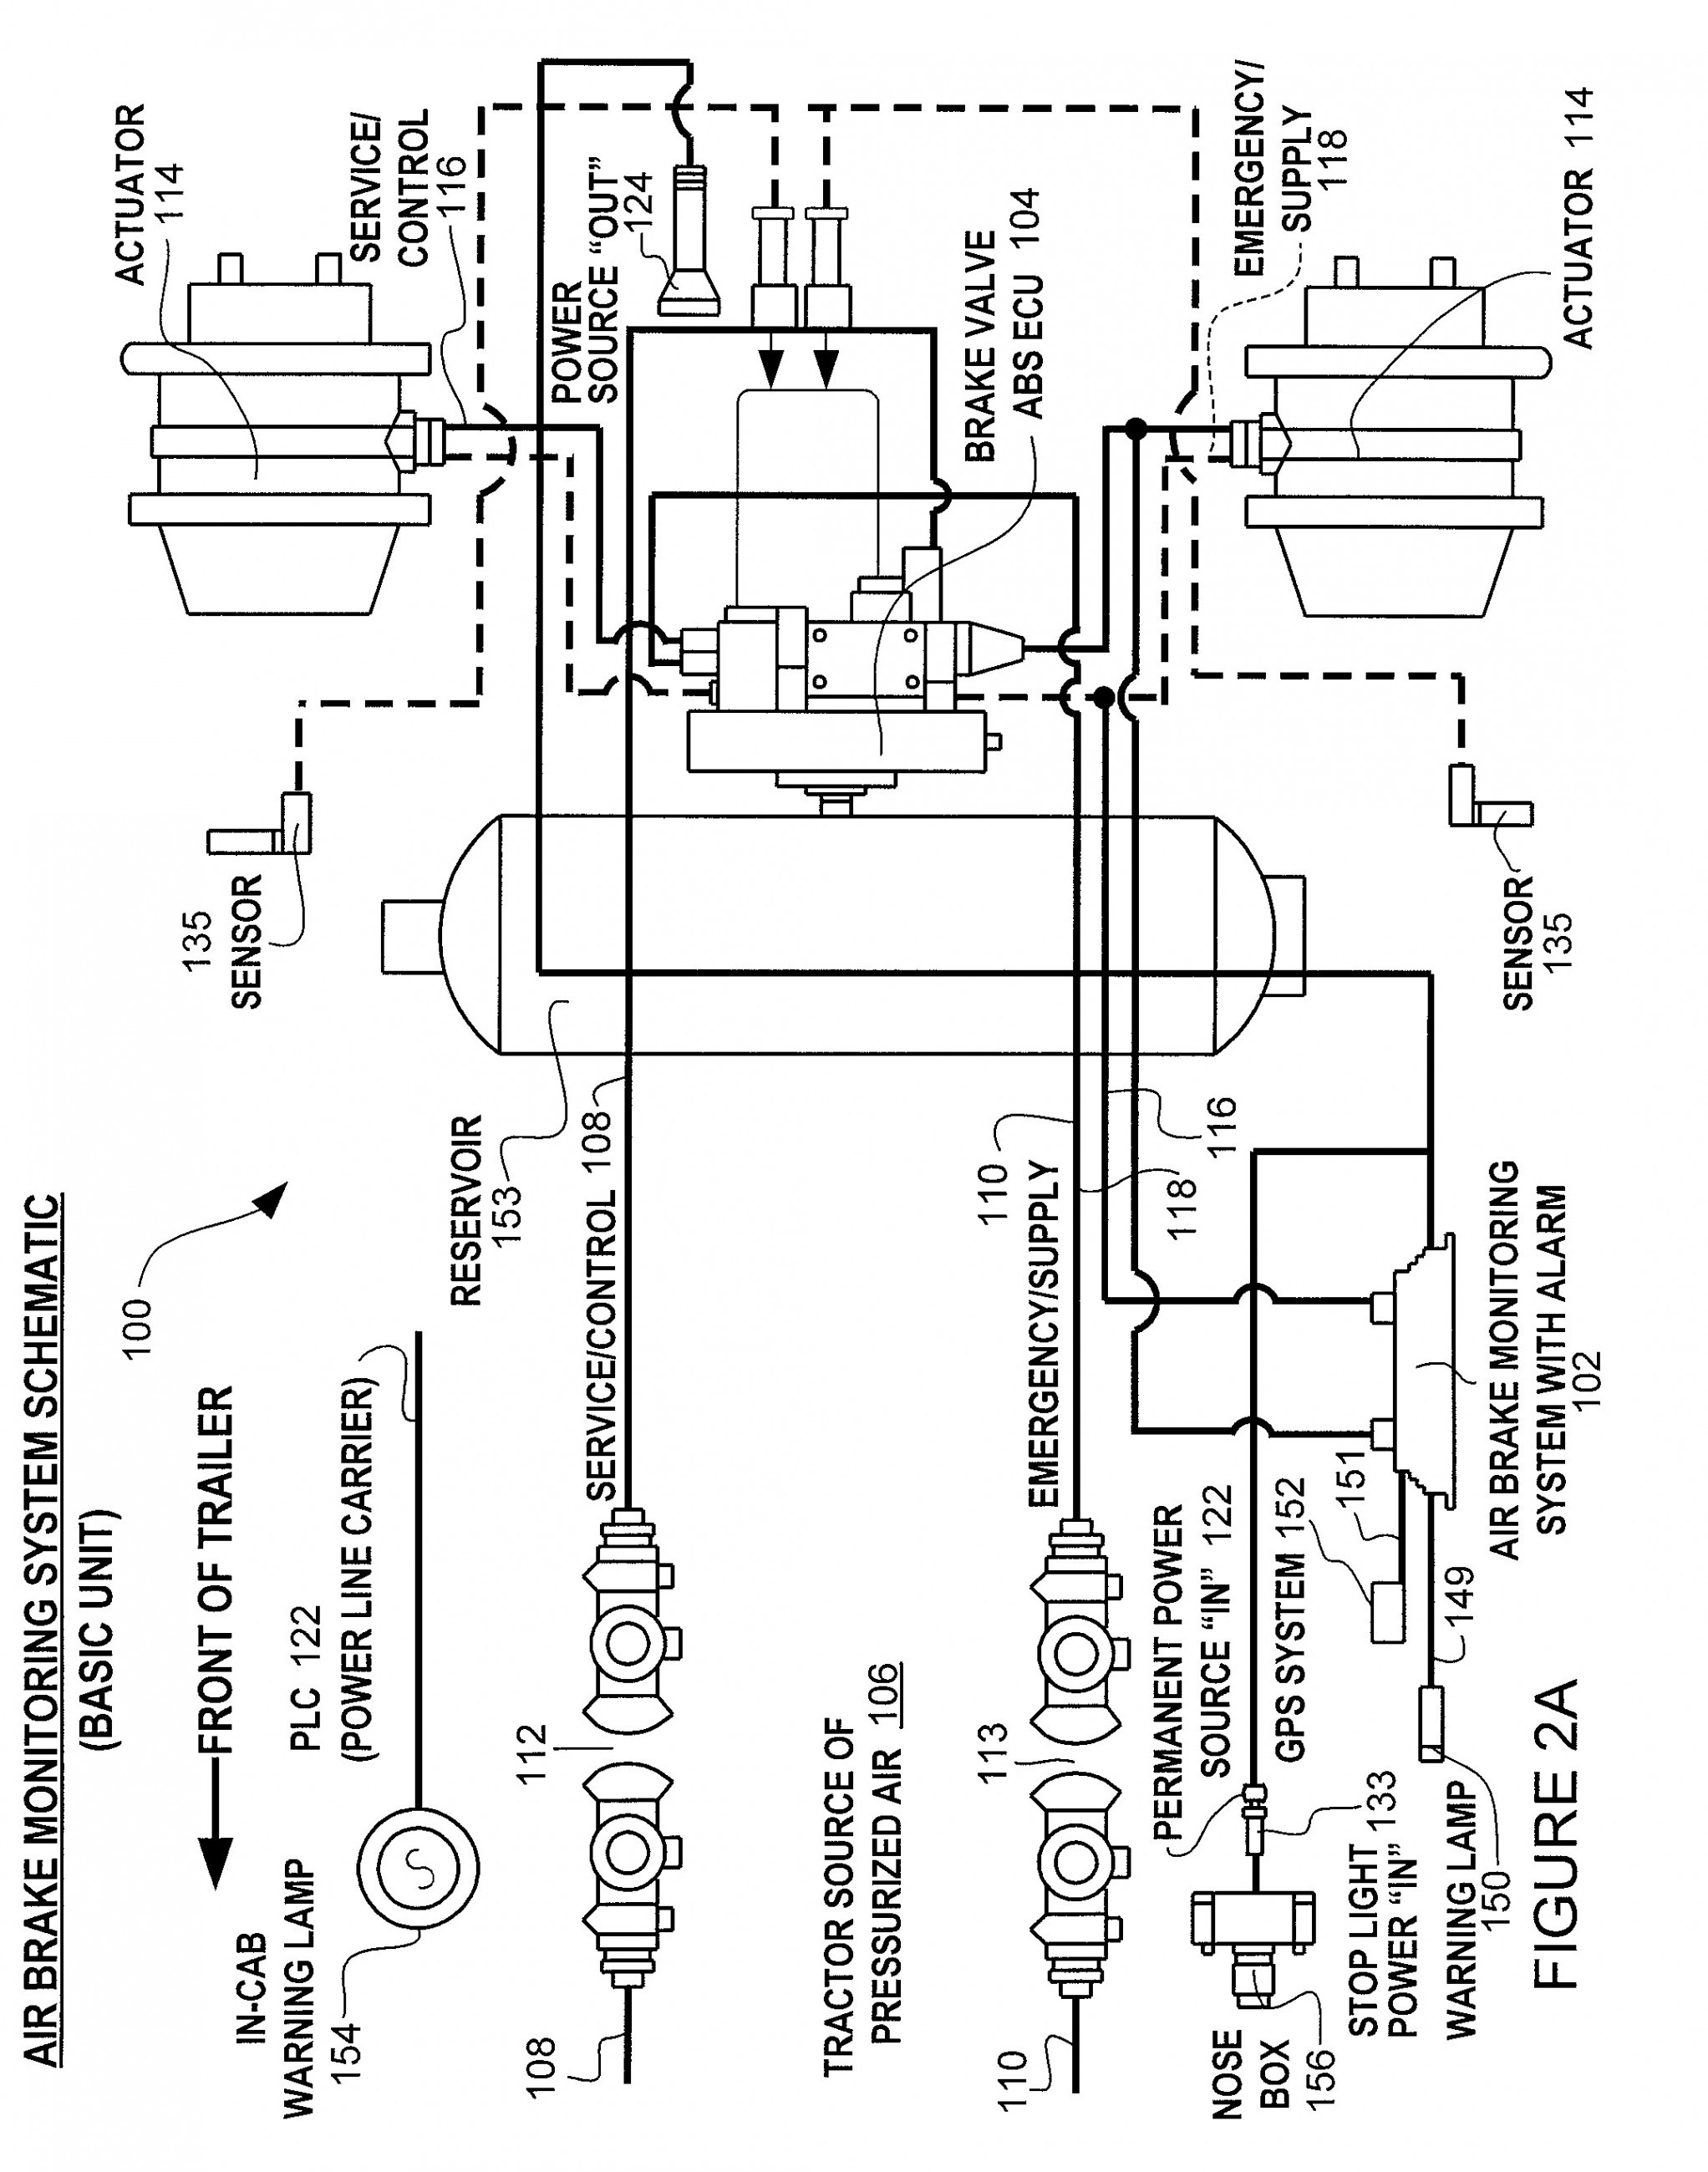 Air Brake System Diagram Truck Air Brake System Diagram – Air Brake Circuit Diagram Awesome Air Of Air Brake System Diagram Truck